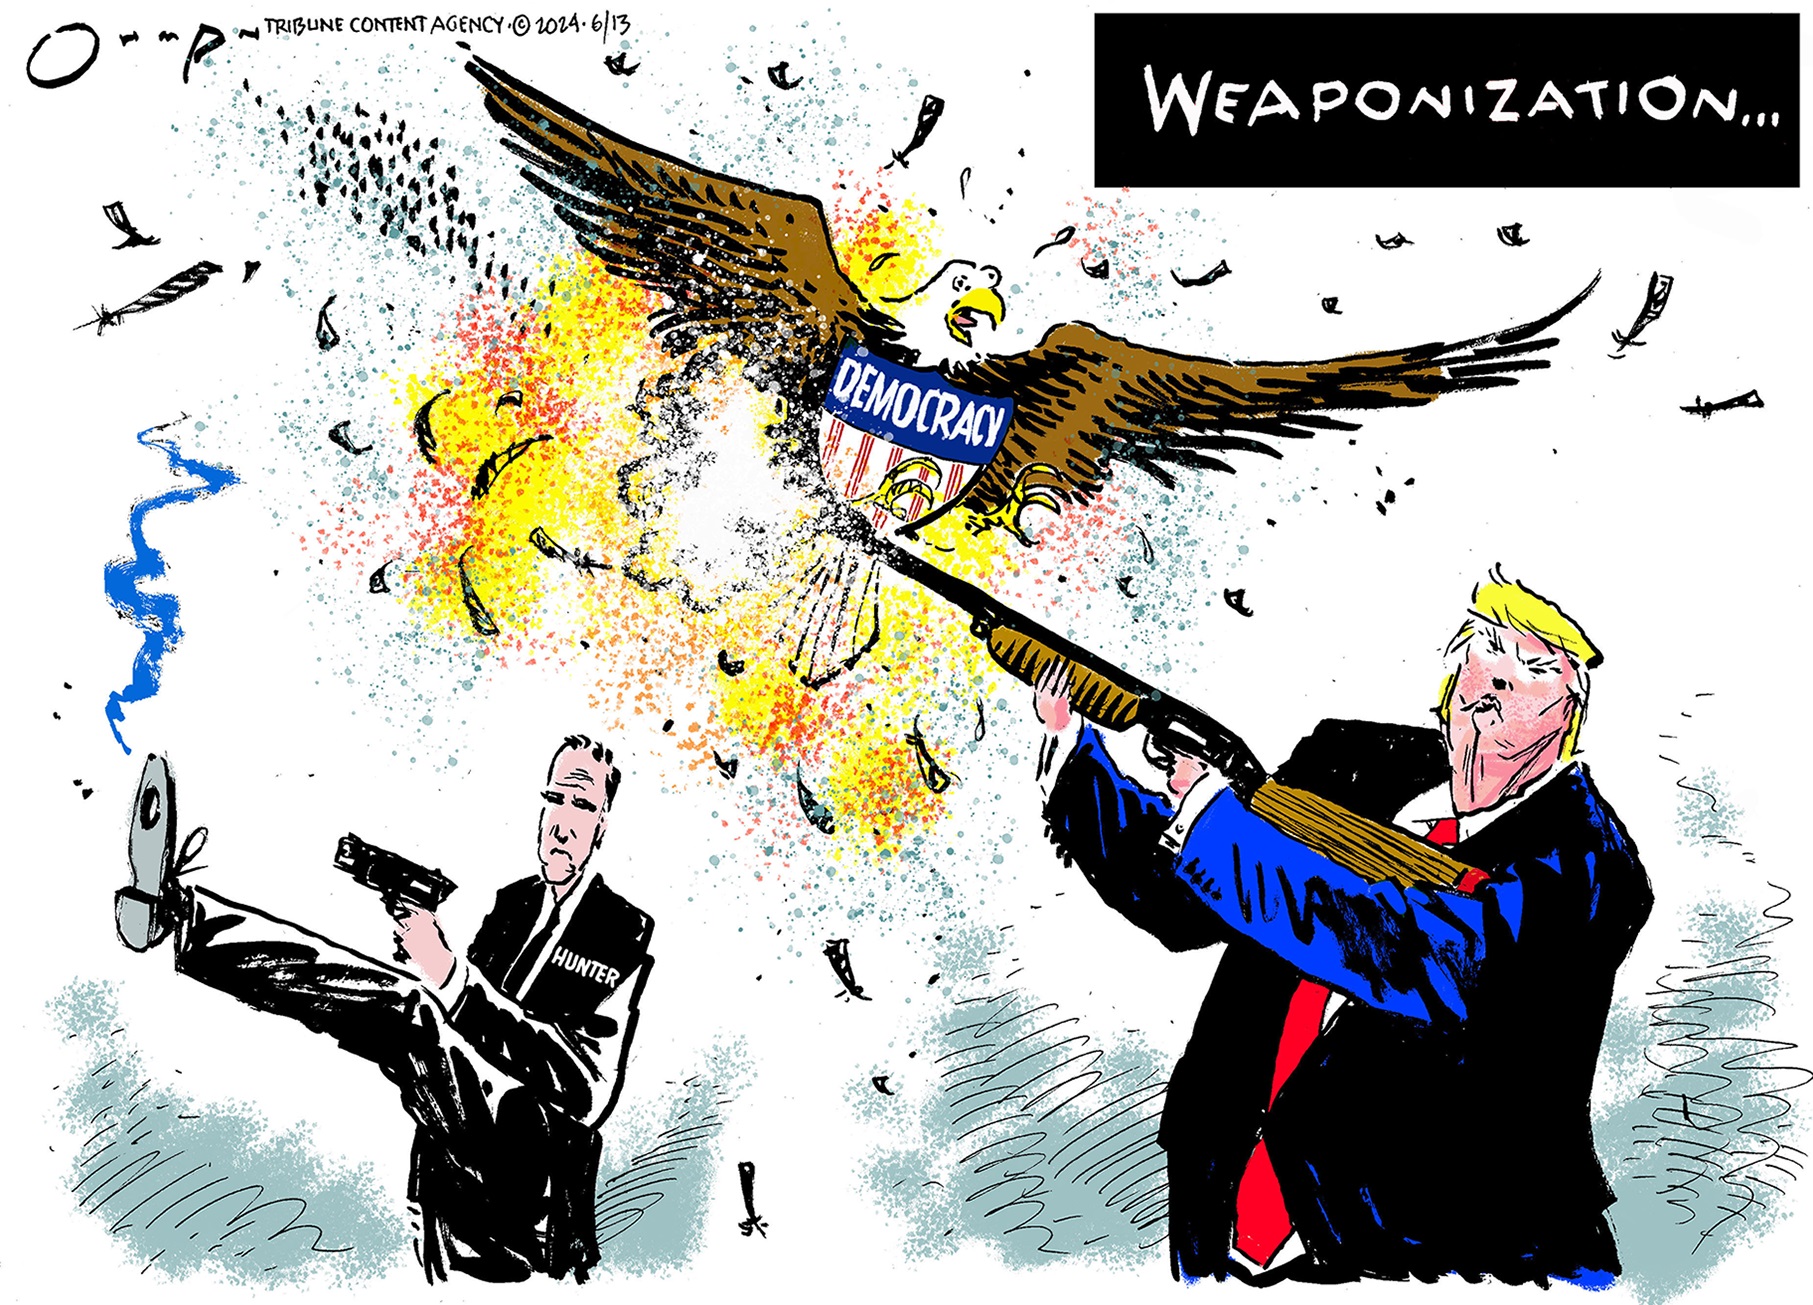 June 15: Weaponization